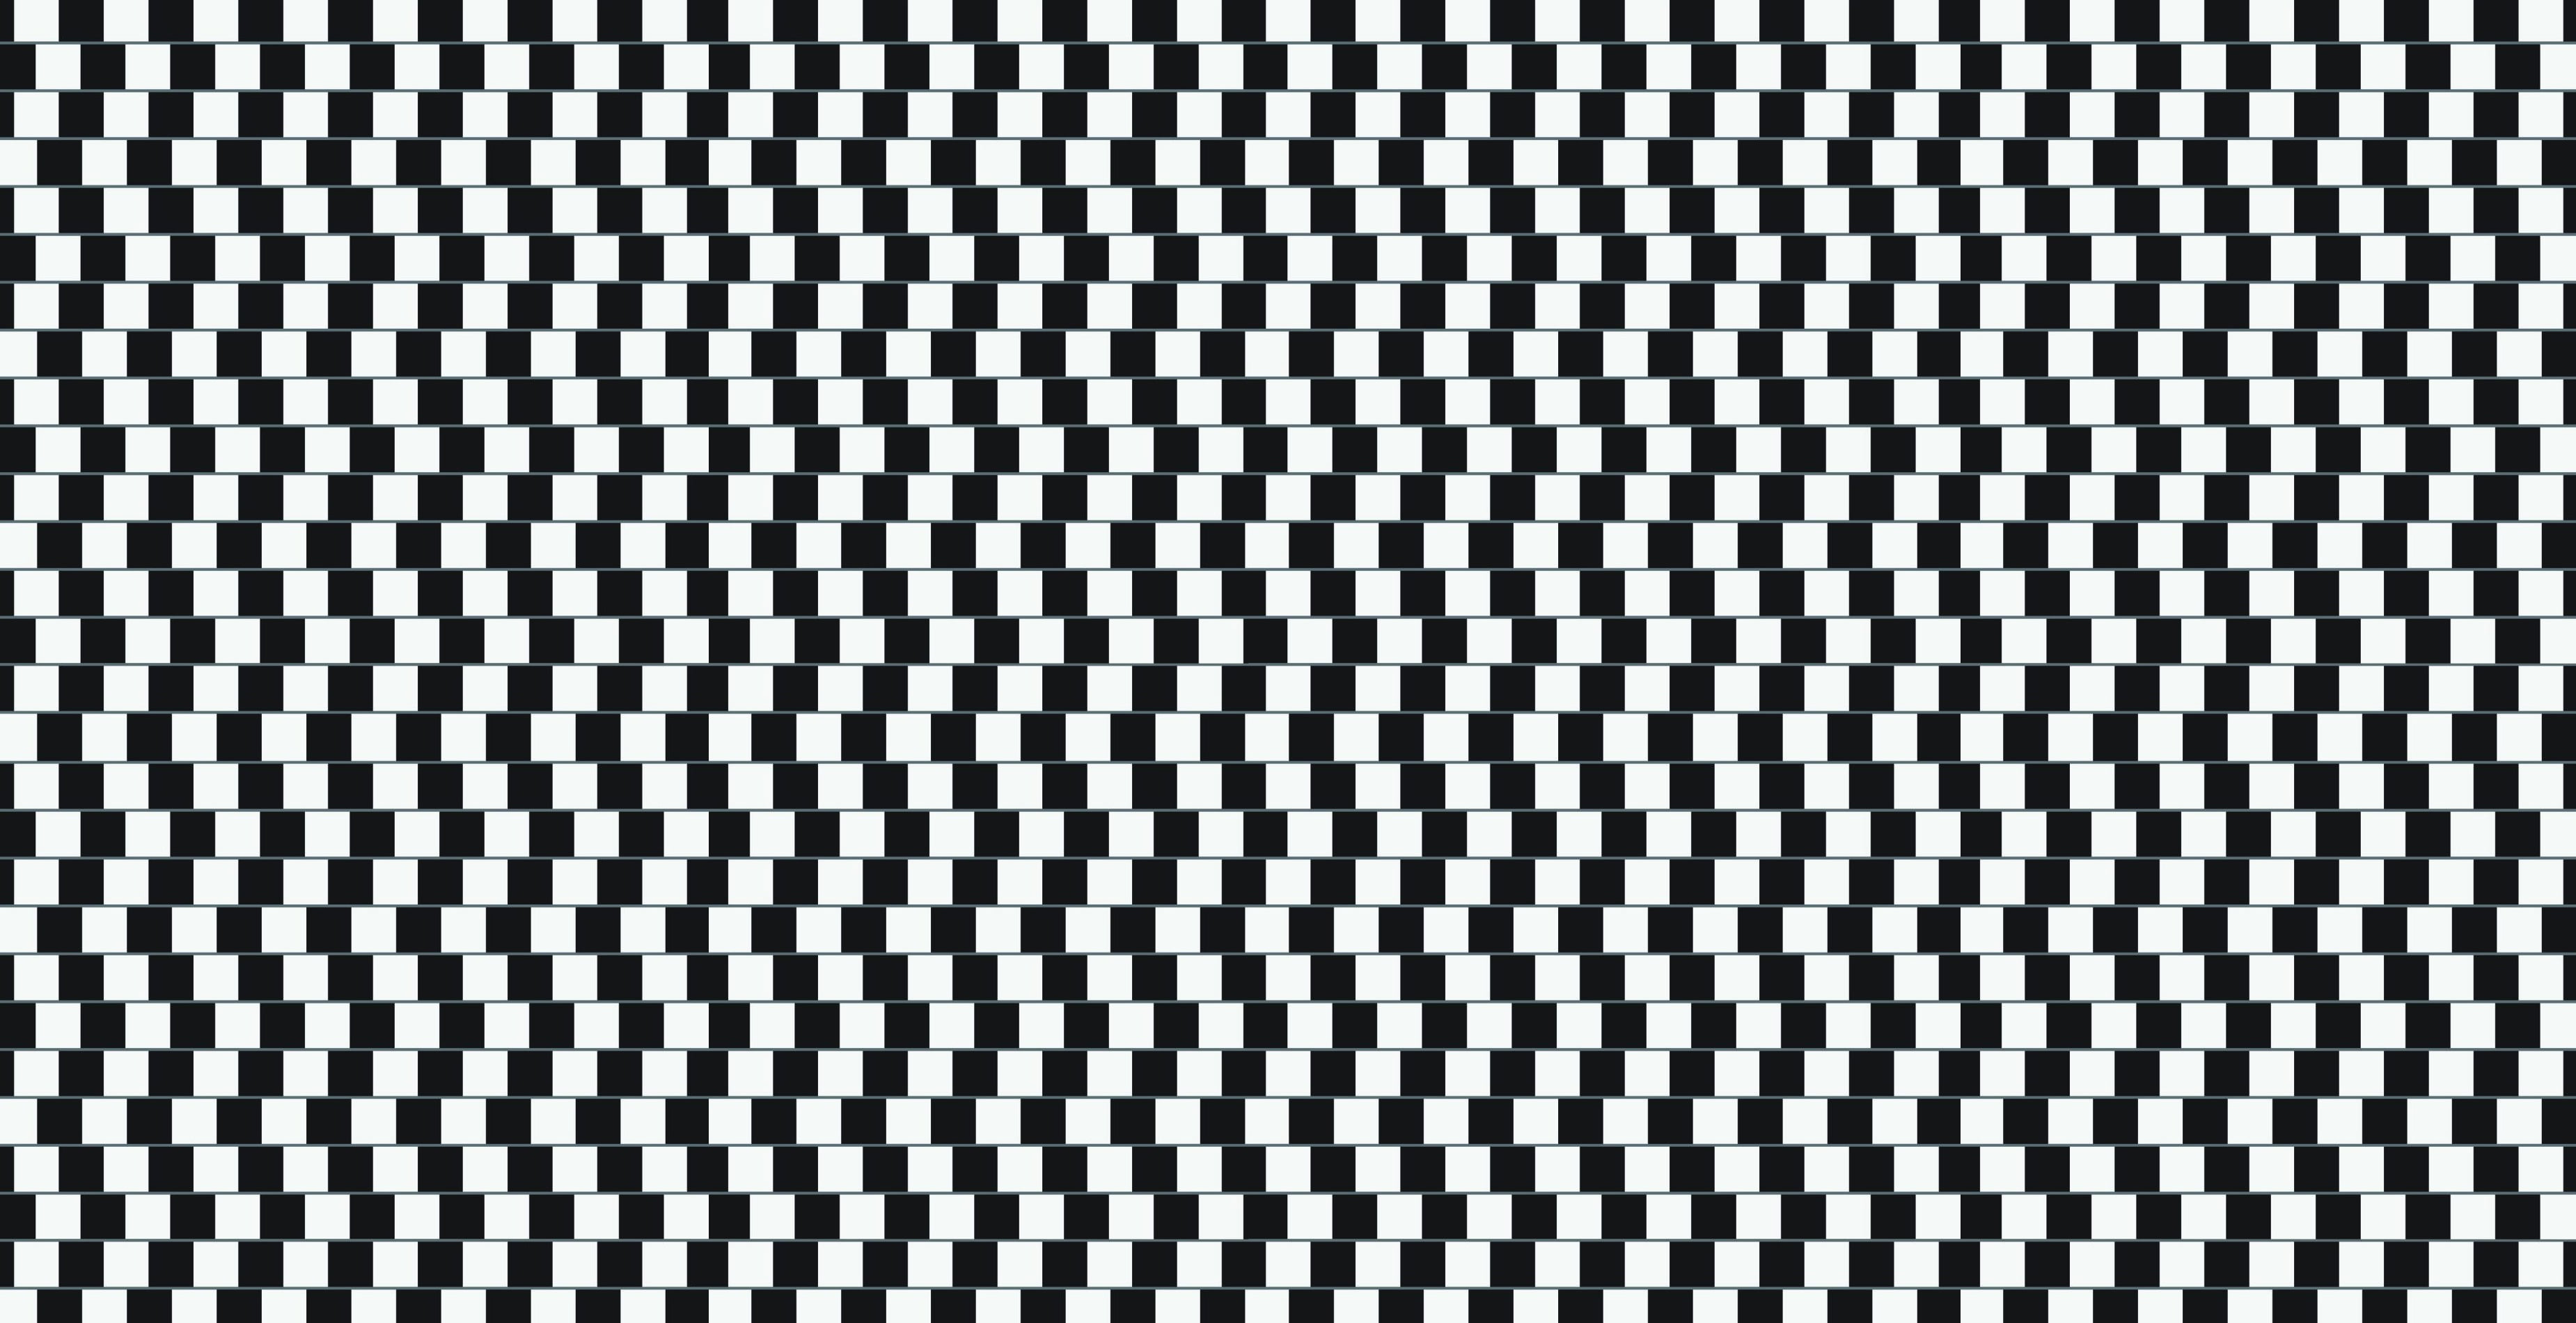 Line, Squares, Background, Illusion, madeinkipish, Optical illusion